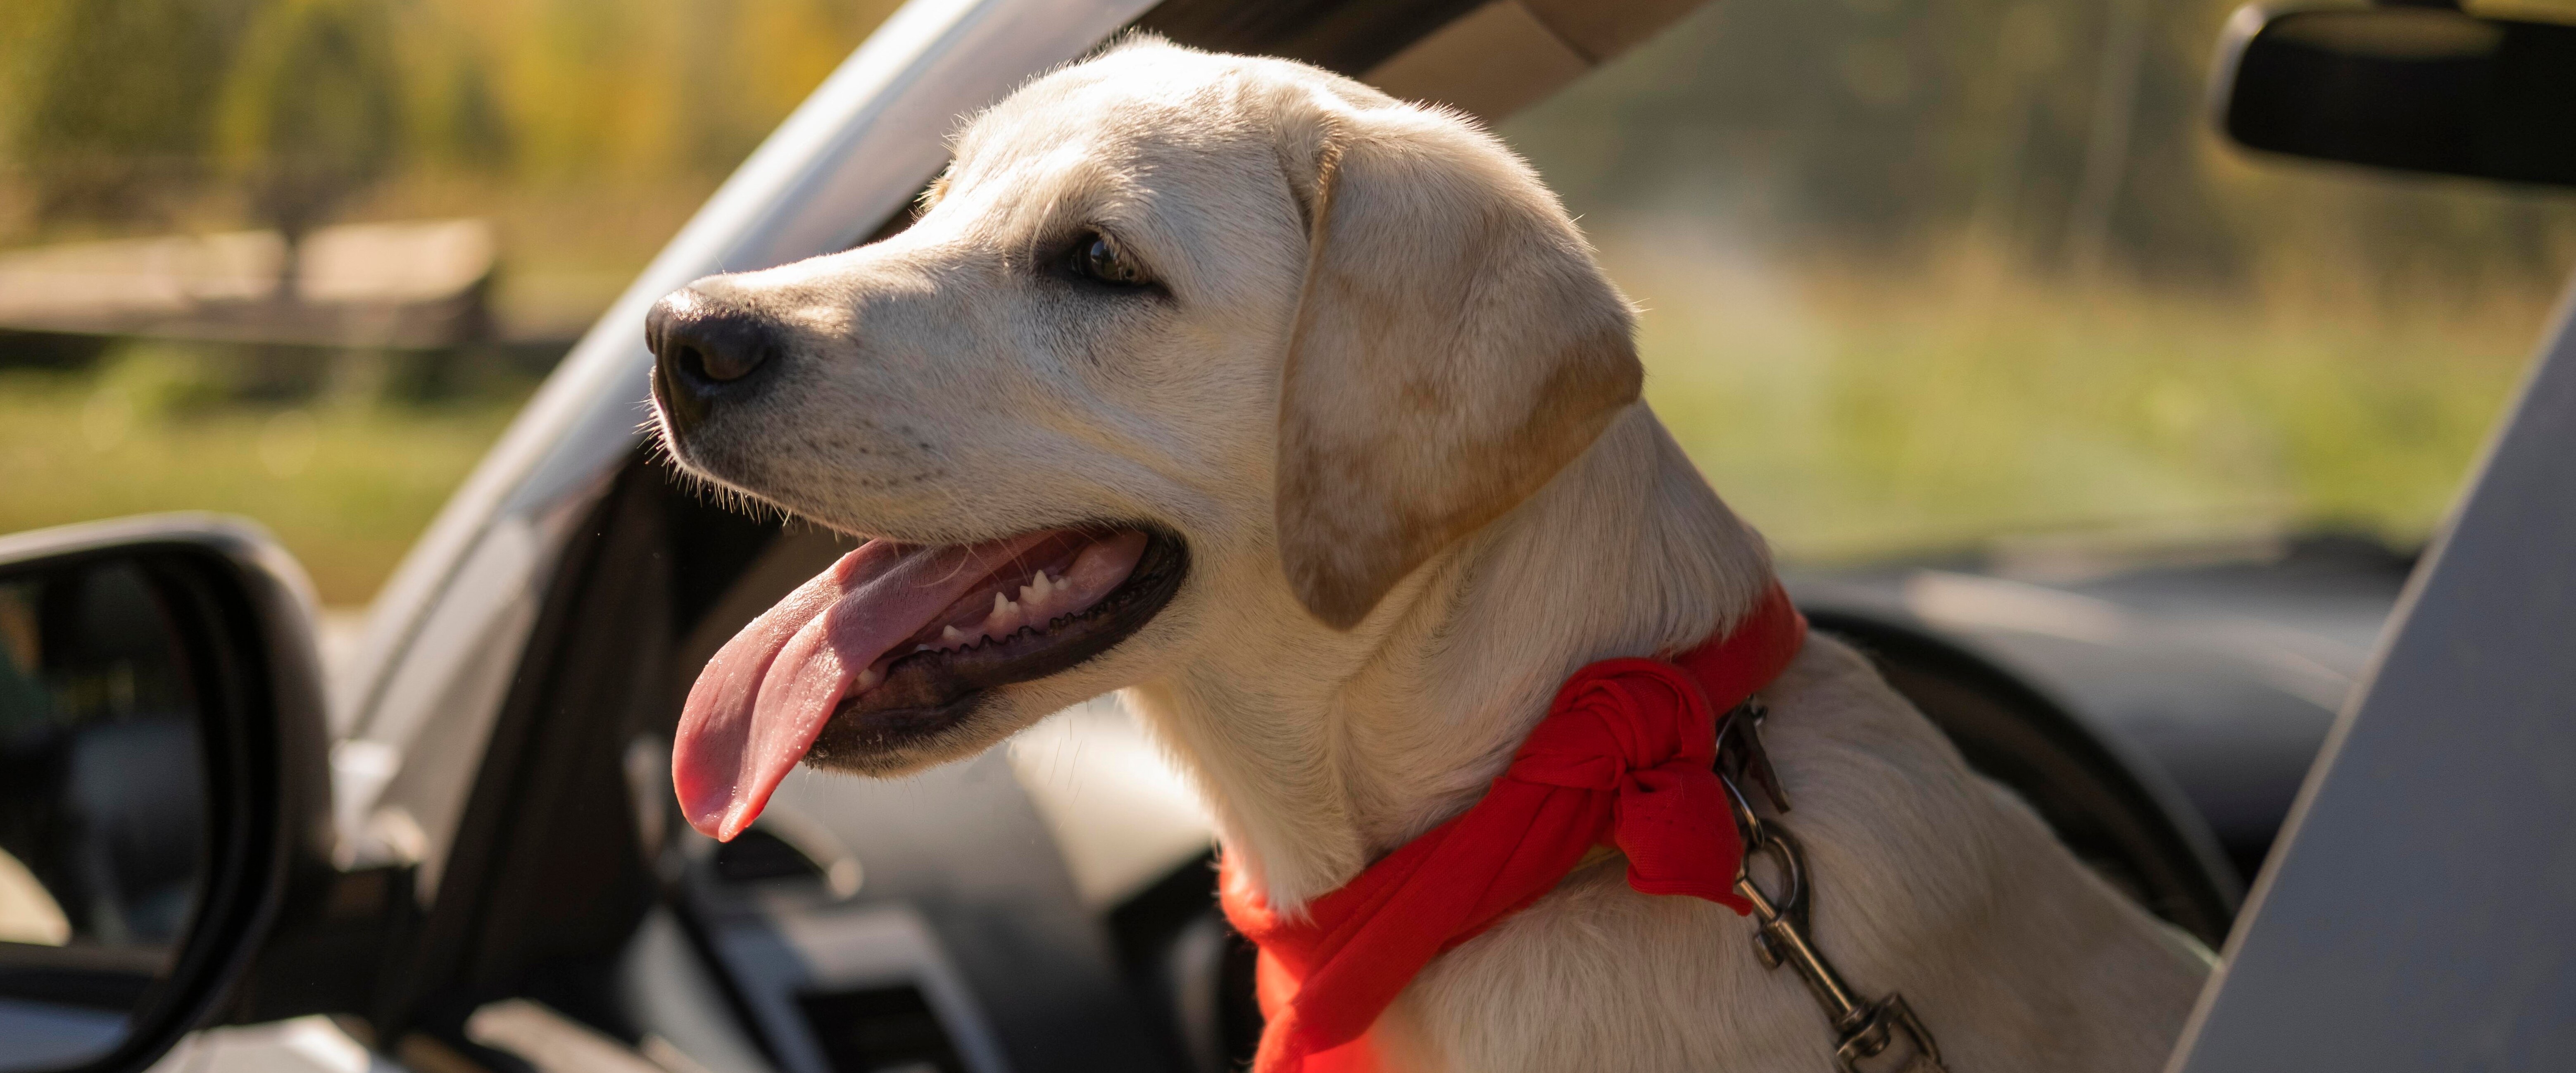 jordnødder kandidatskole Baby Hund i bilen - Tips og råd til at have hunden med i bilen